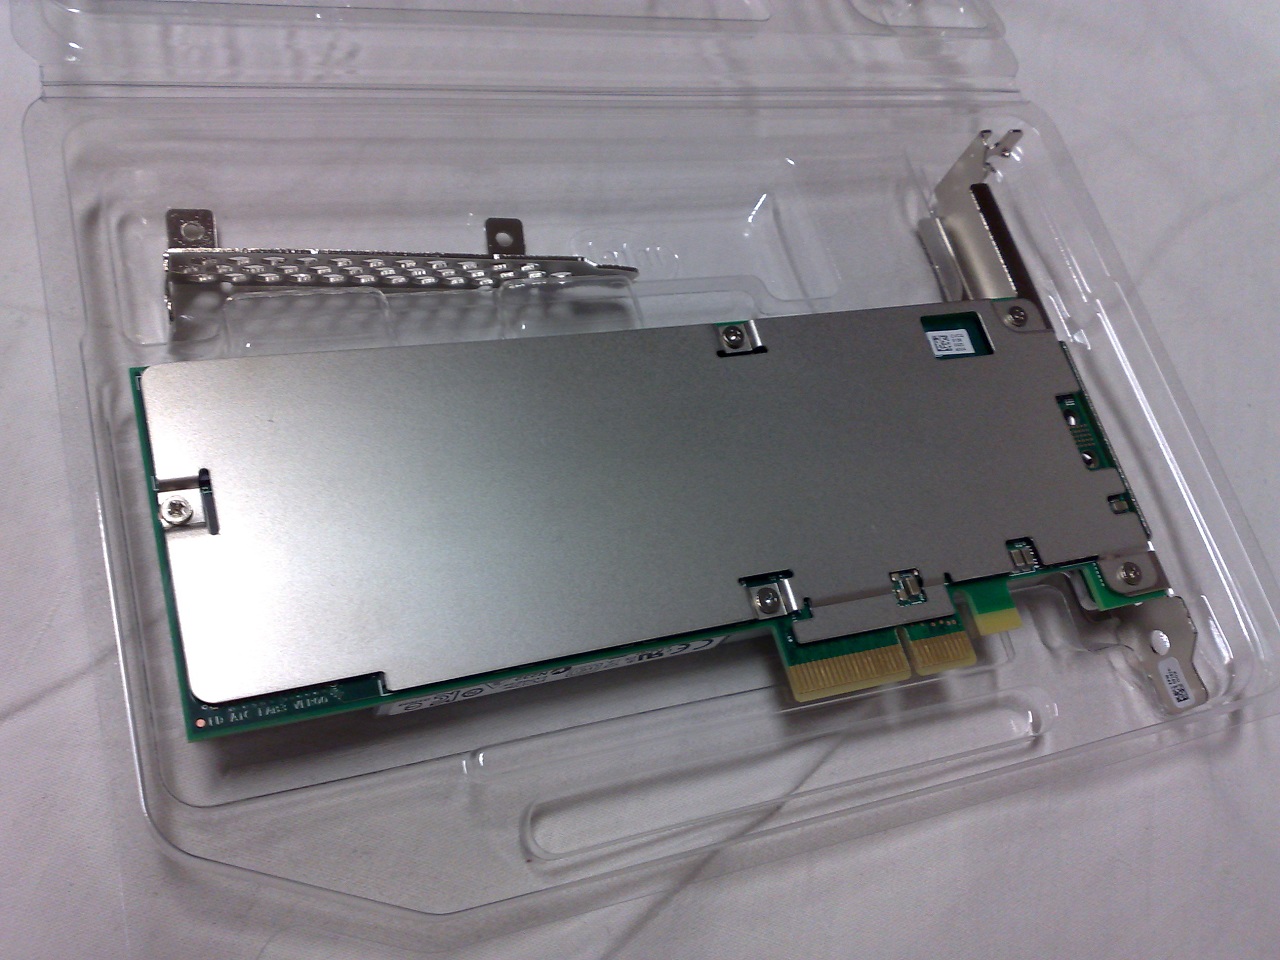 Archivo:Intel SSD 750 series, 400 GB add-in card model, bottom view.jpg -  Wikipedia, la enciclopedia libre